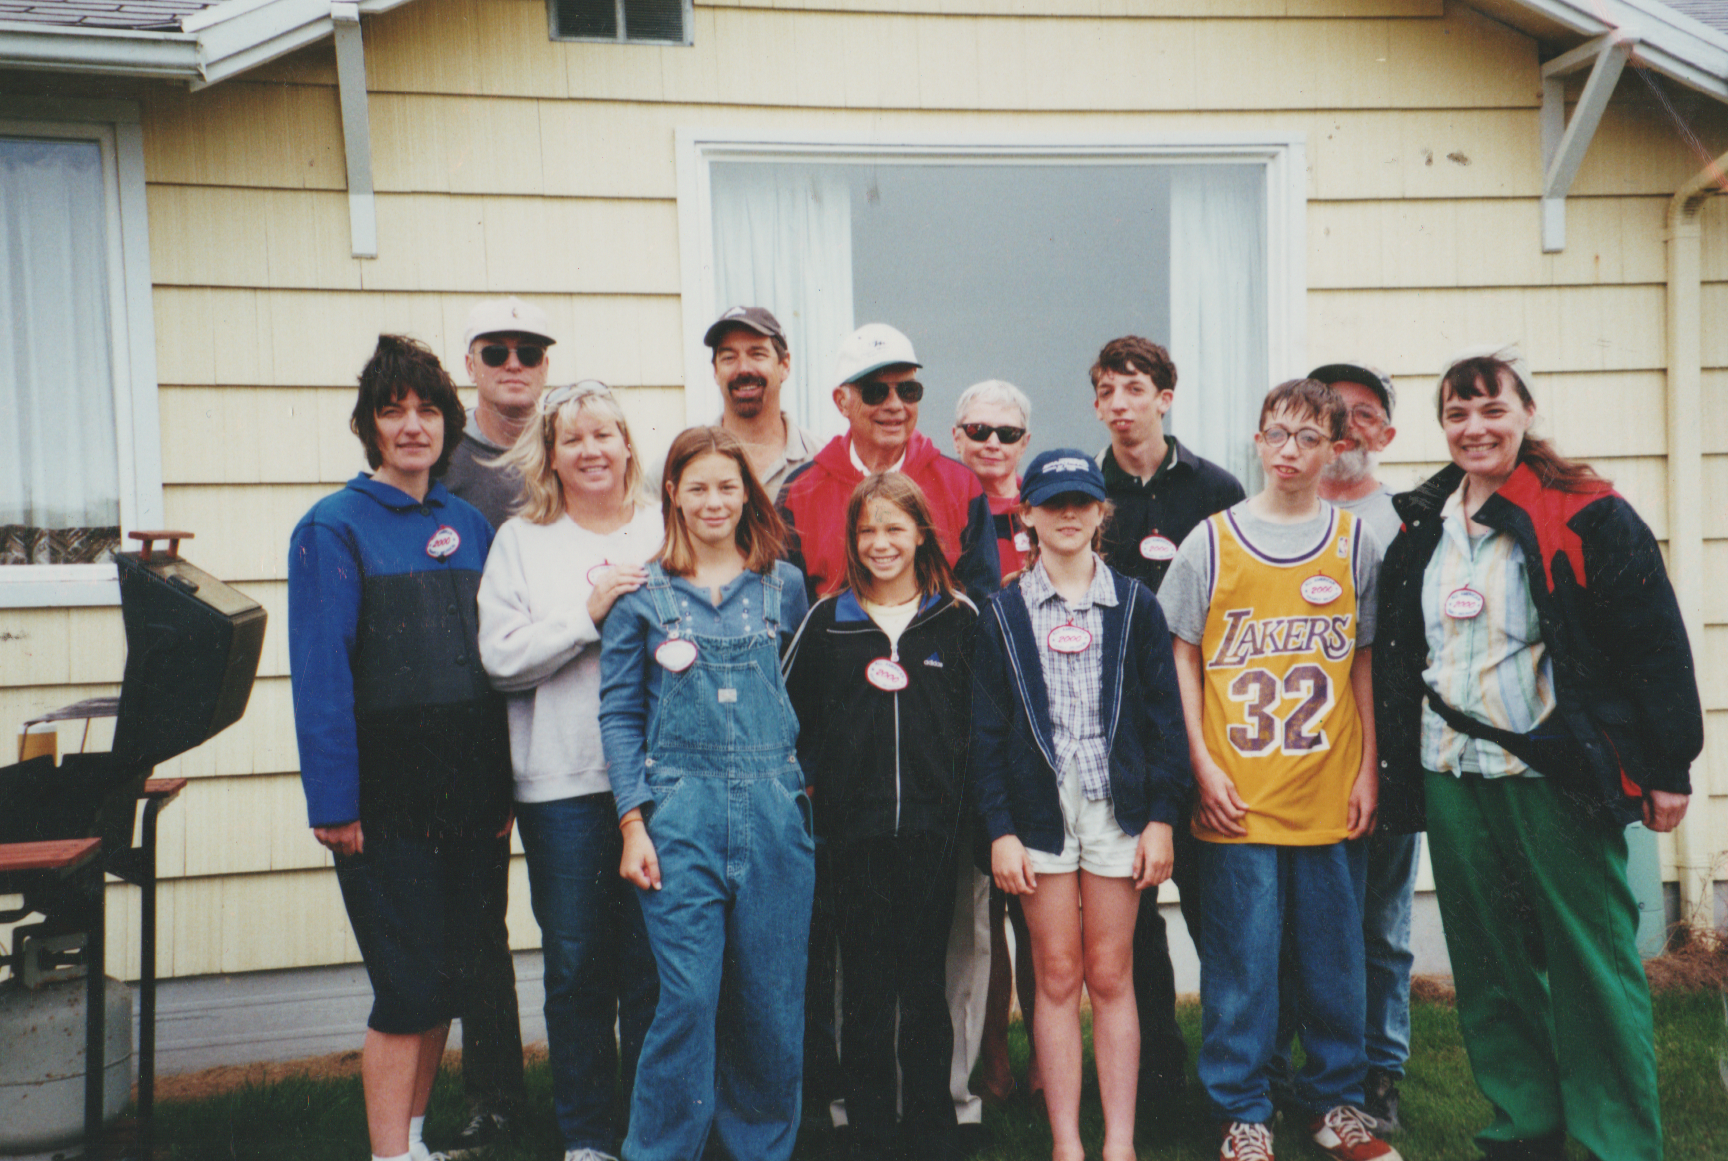 2000-07 - Morehead Pickett Family Reunion, Fam of Richard Morehead-4 - MEDIUM ok ok.png